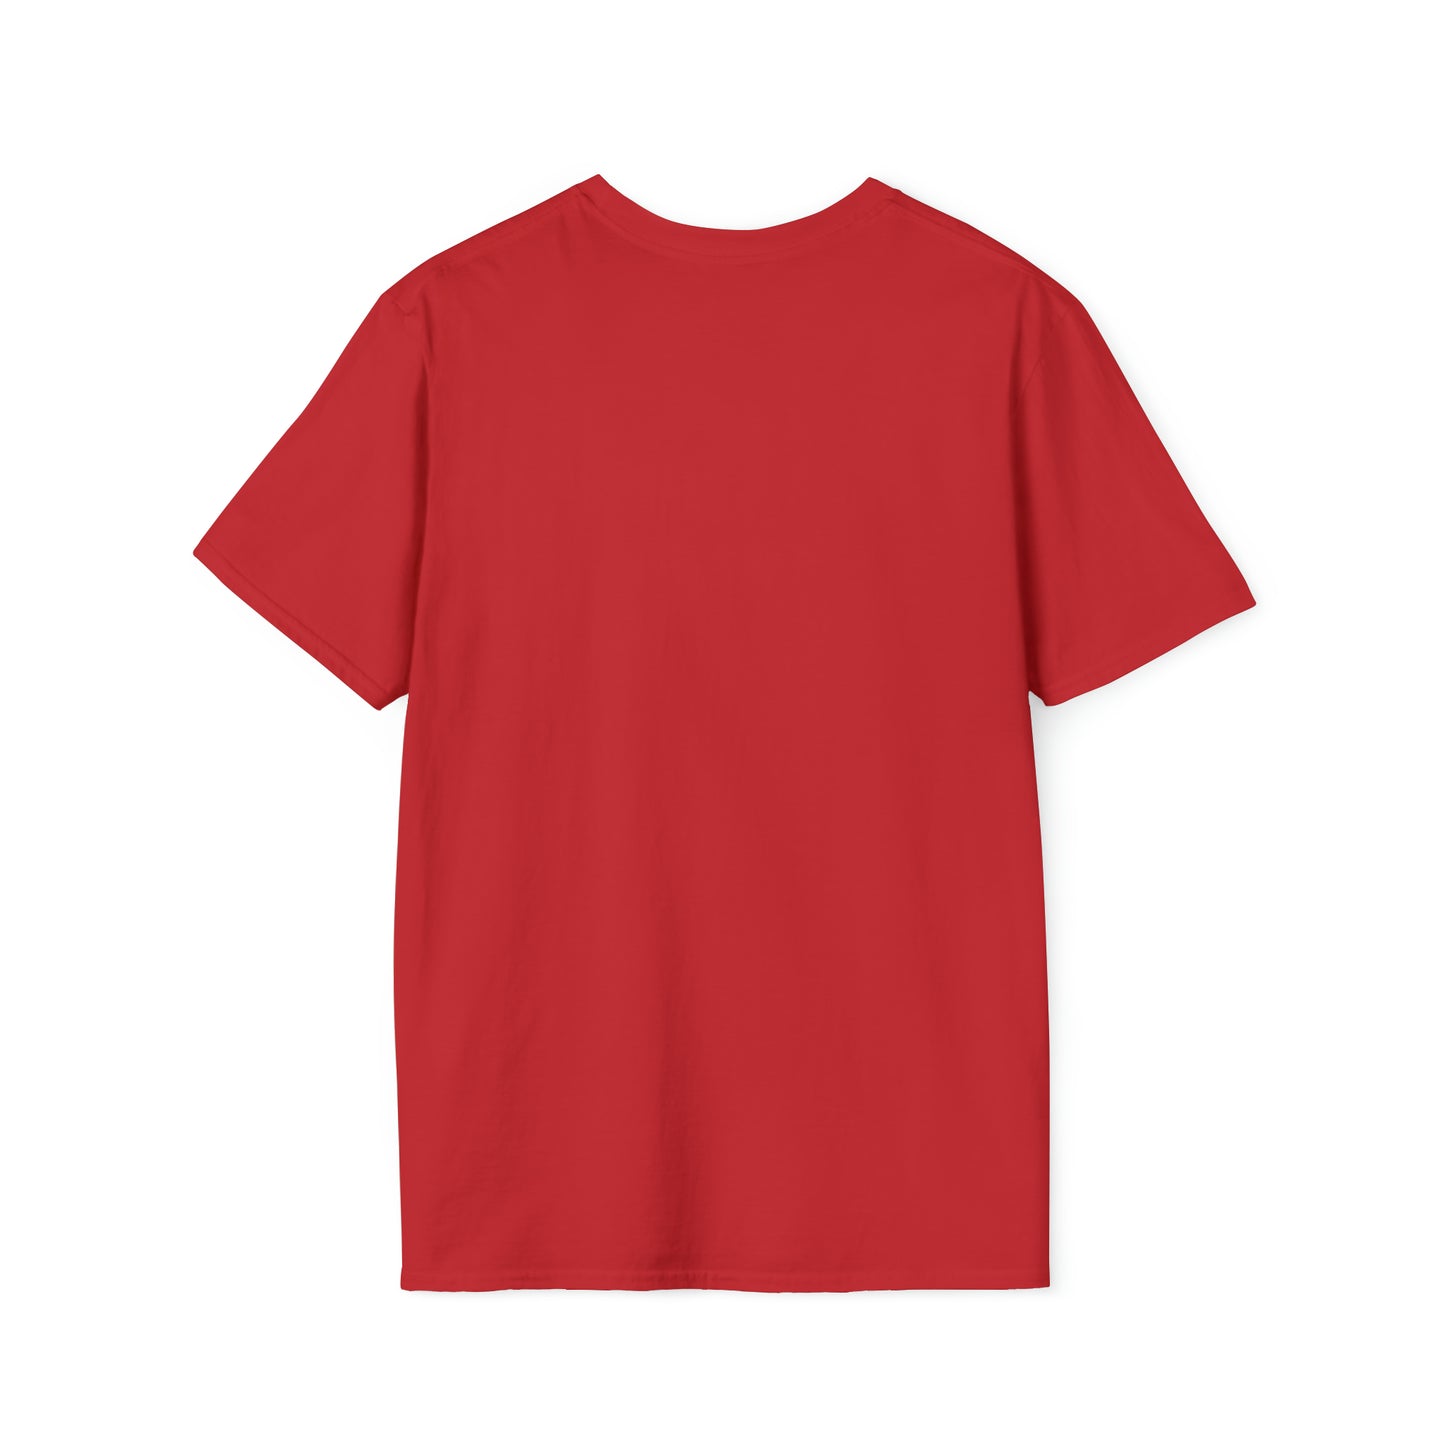 Braves Basketball Unisex Softstyle T-Shirt